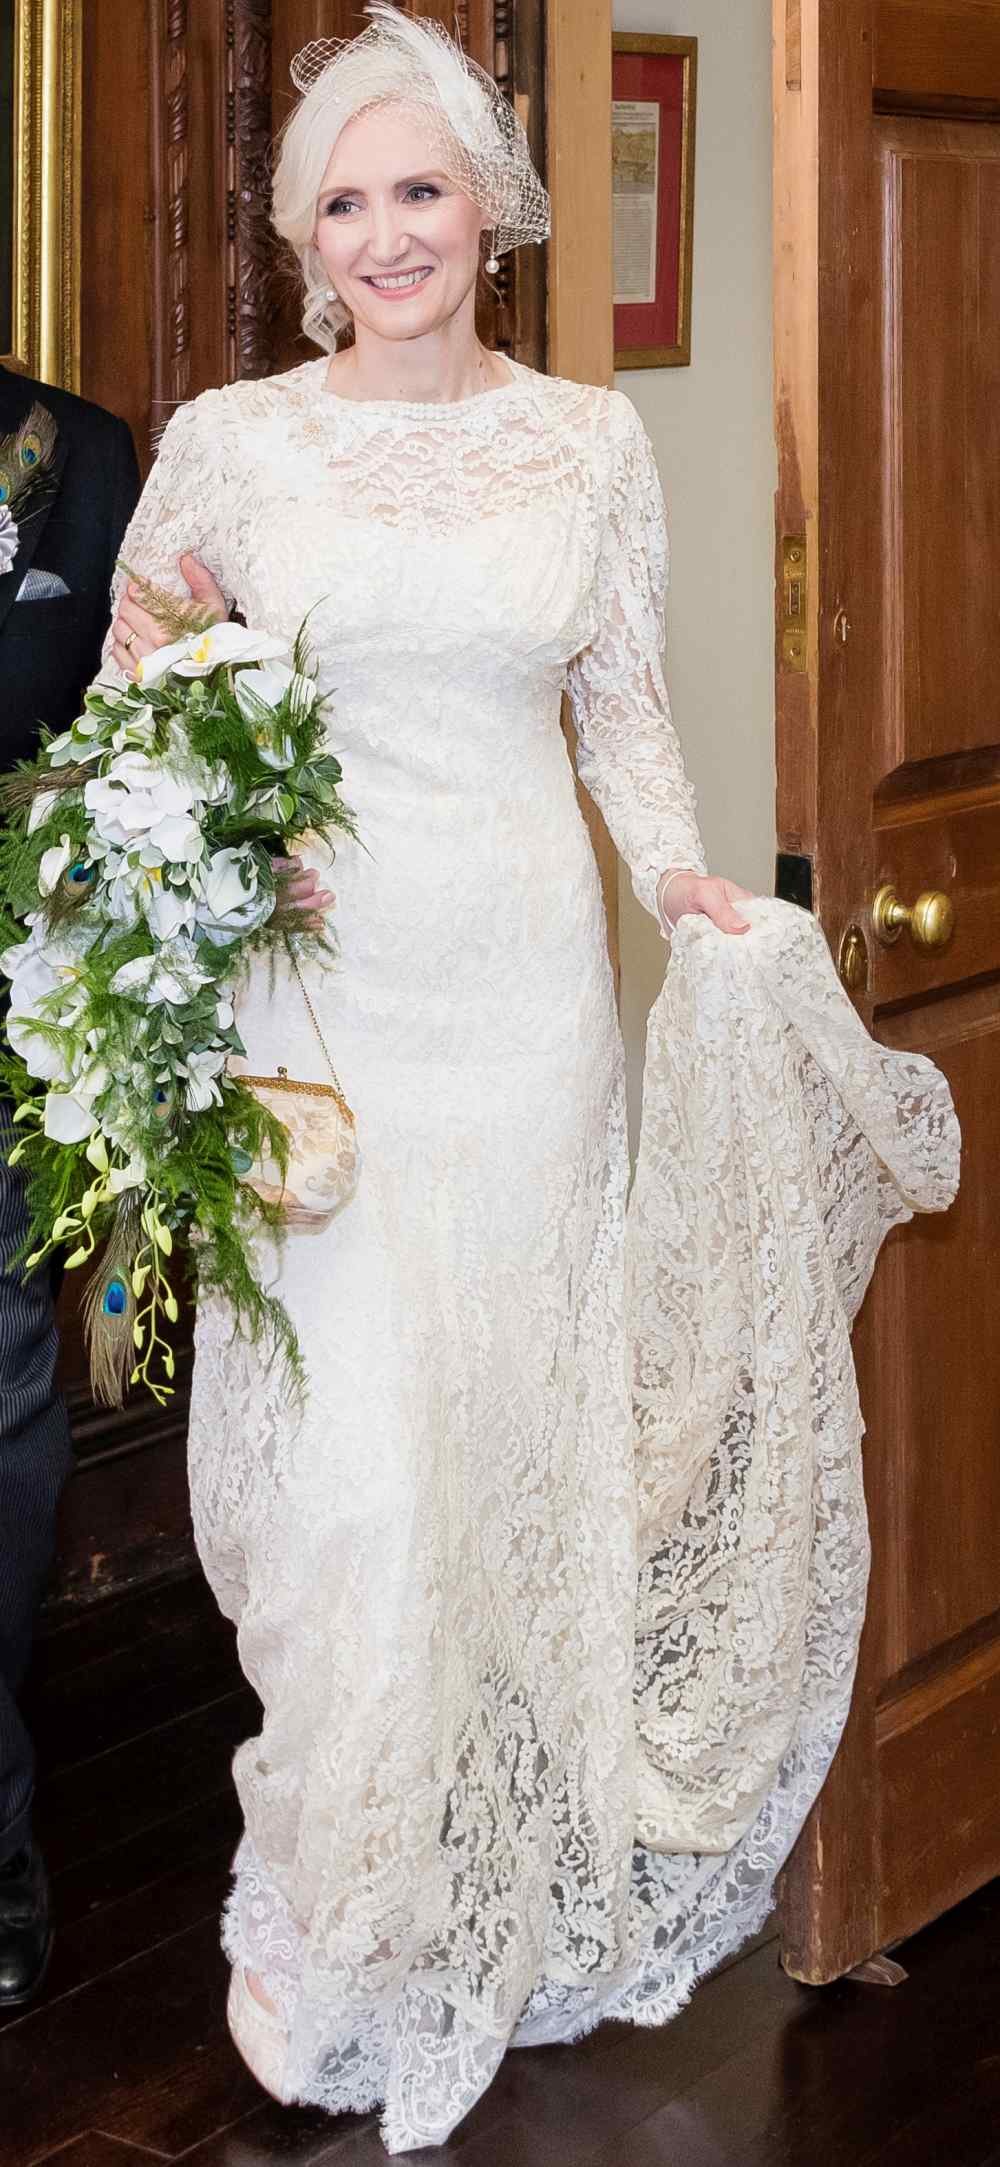 Lace Wedding Gown Restoration